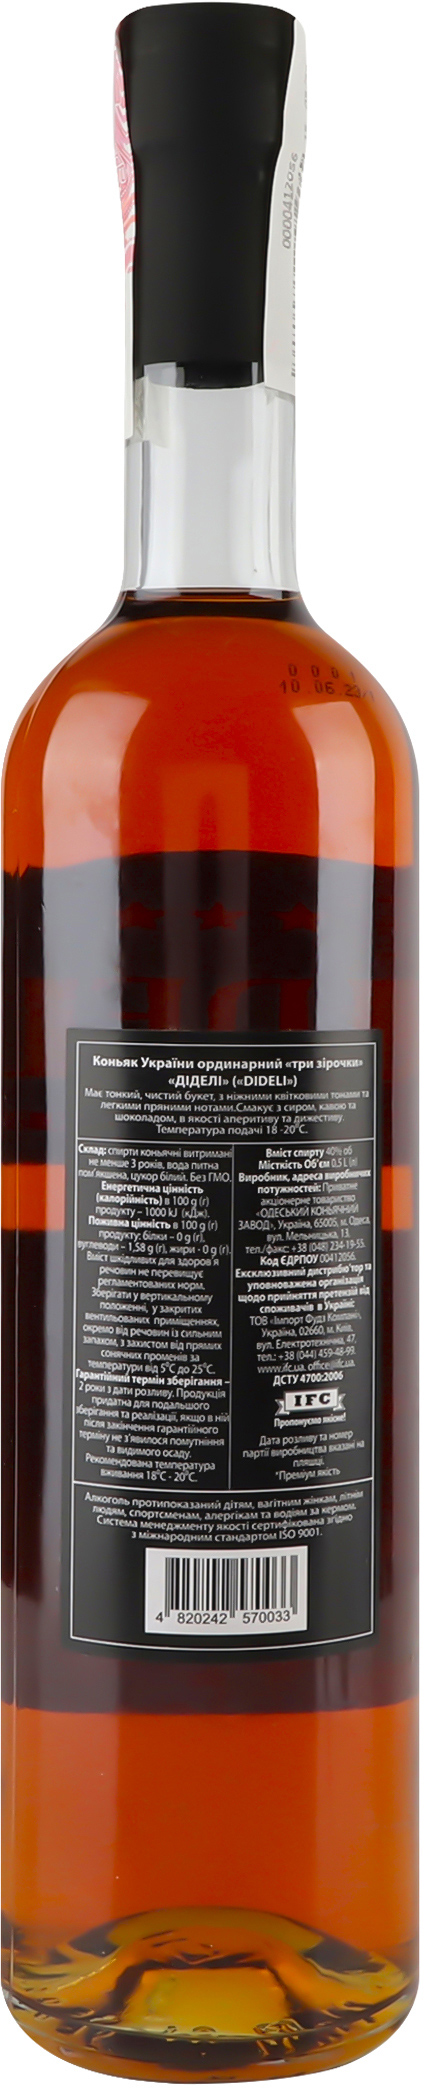 Настойка Samorodok Raspberry on cognac light 0.5 л.